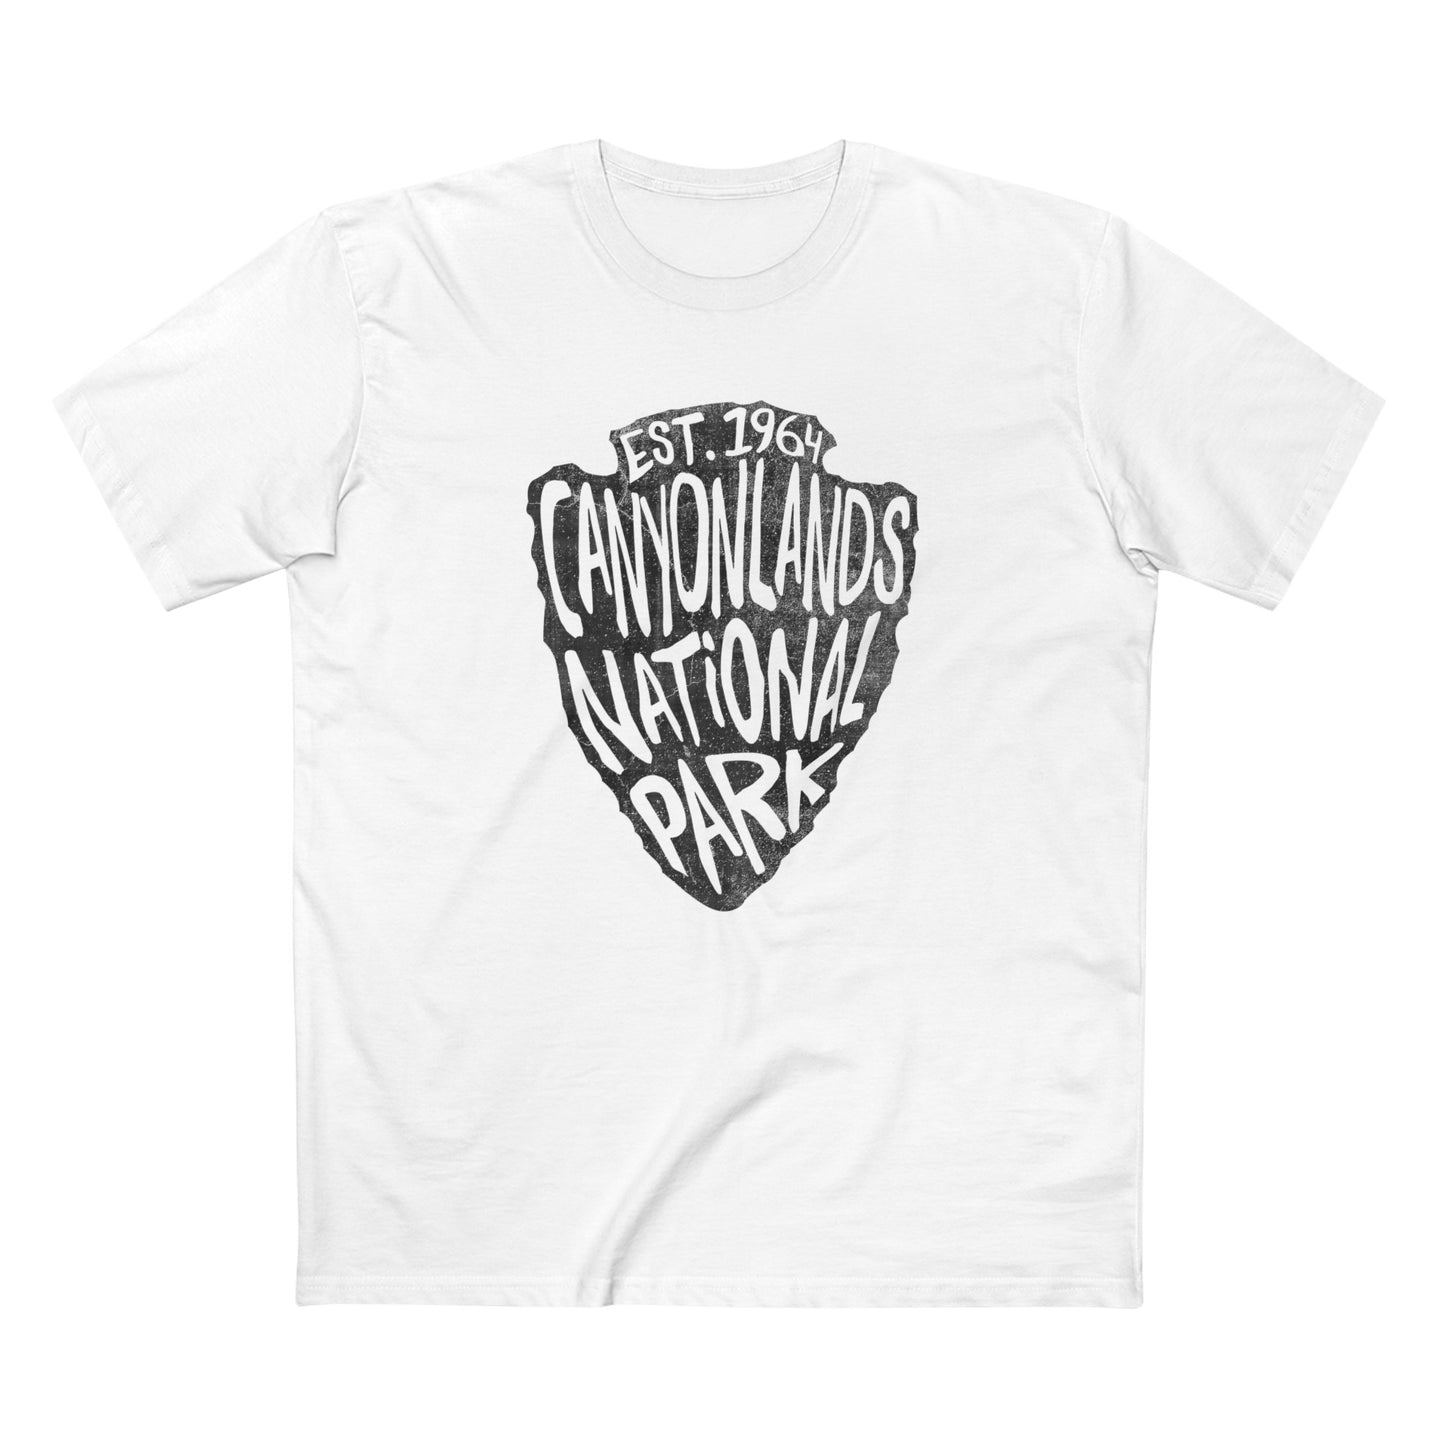 Canyonlands National Park T-Shirt - Arrowhead Design